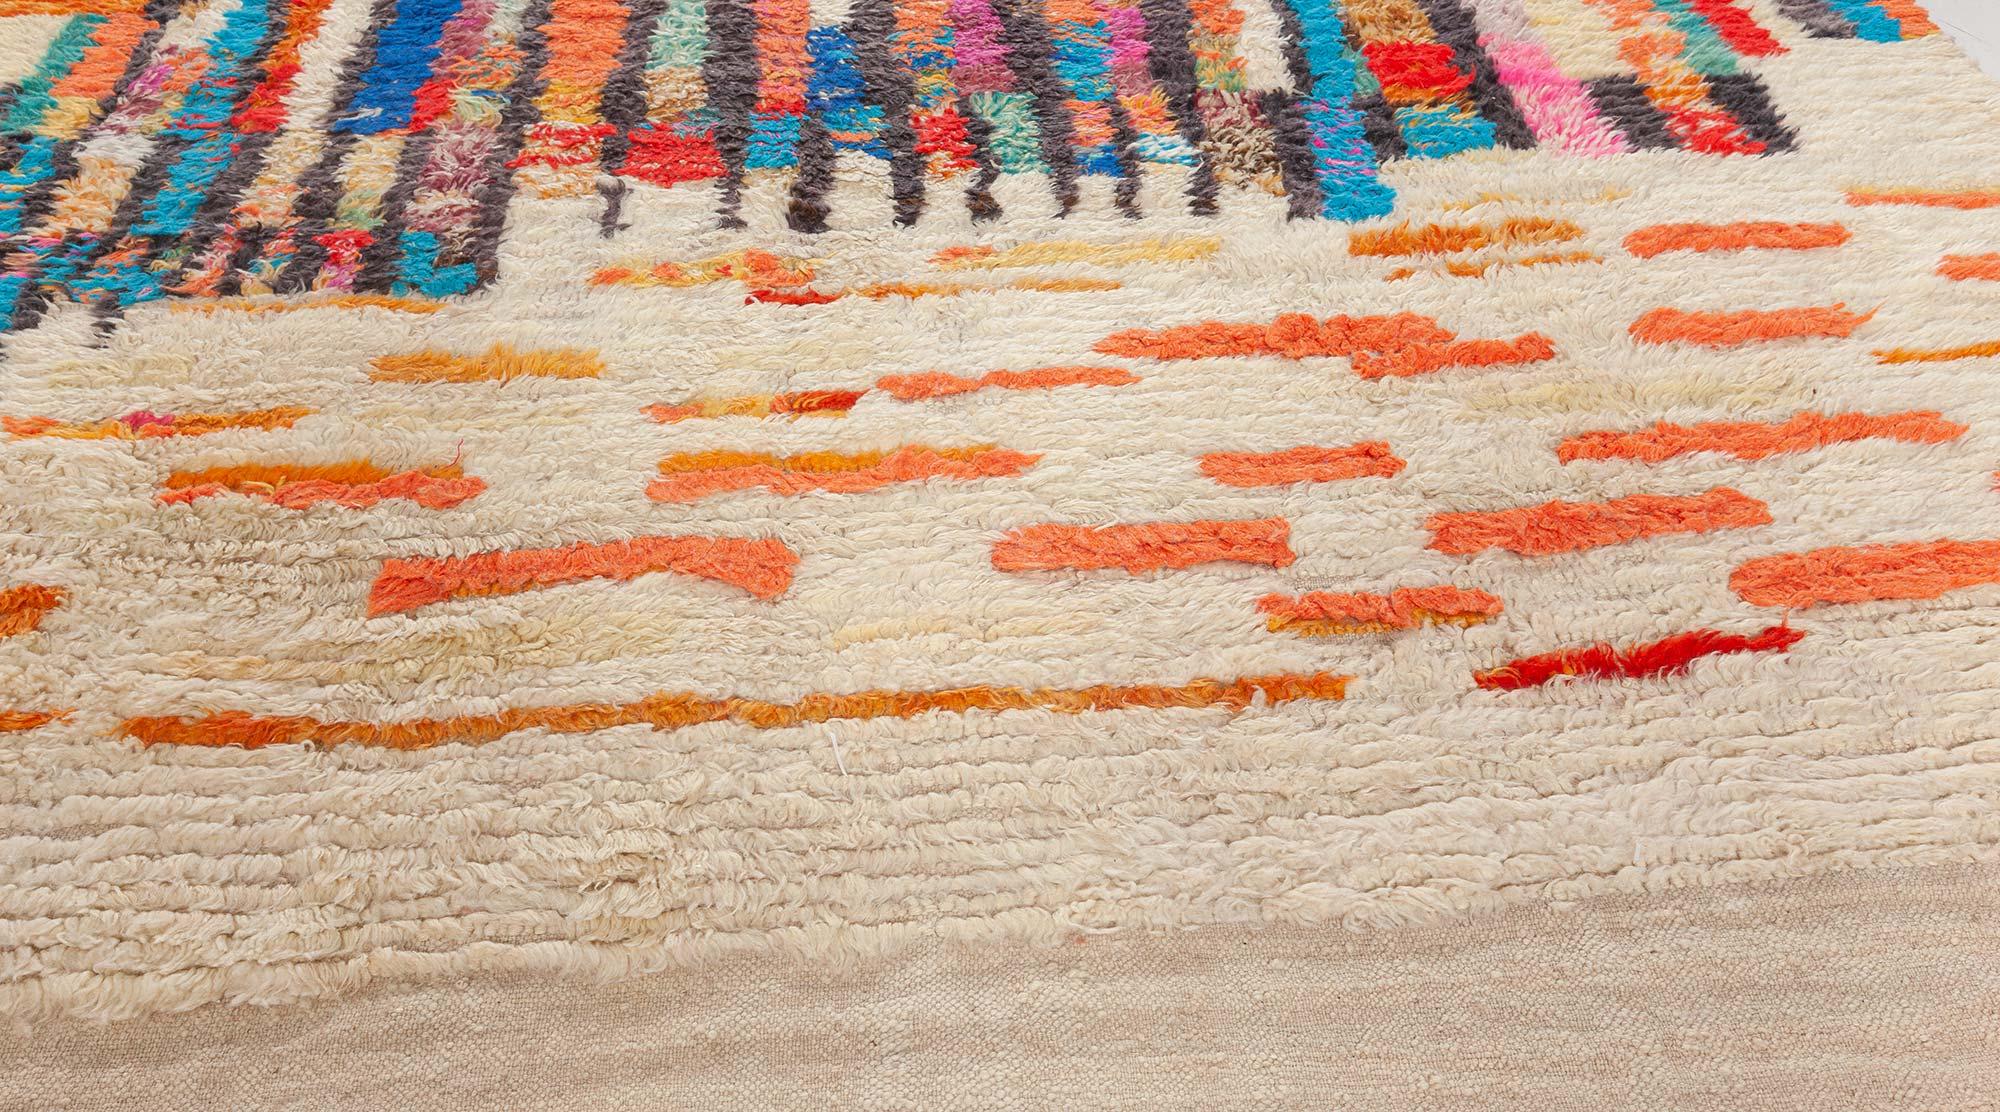 Modern Moroccan rug by Doris Leslie Blau
Size: 10'0